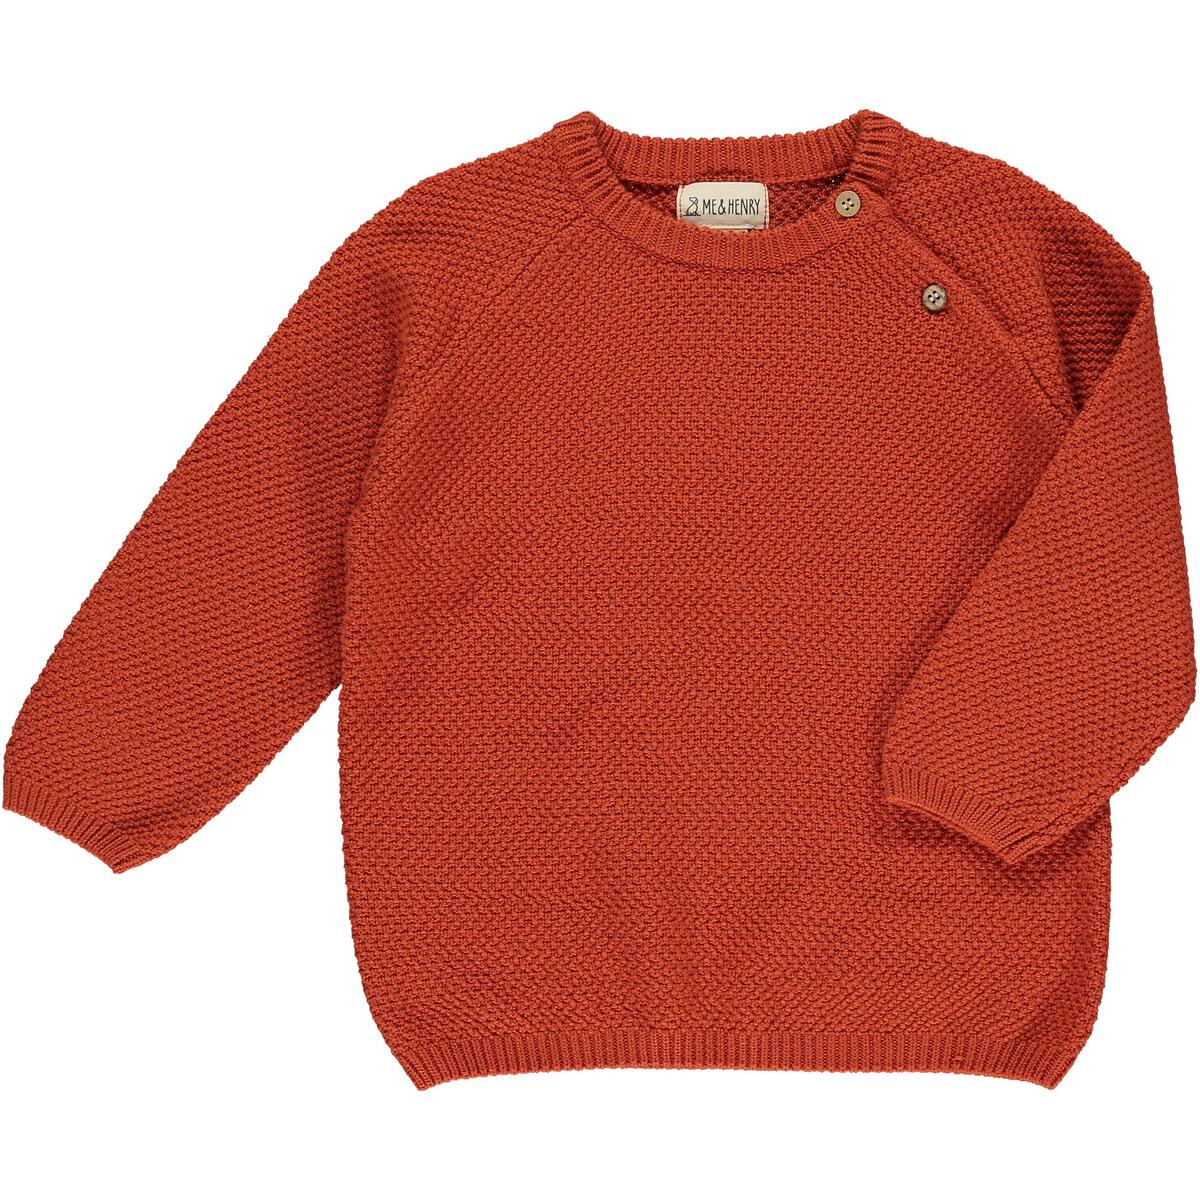 Roan Sweater in Rust